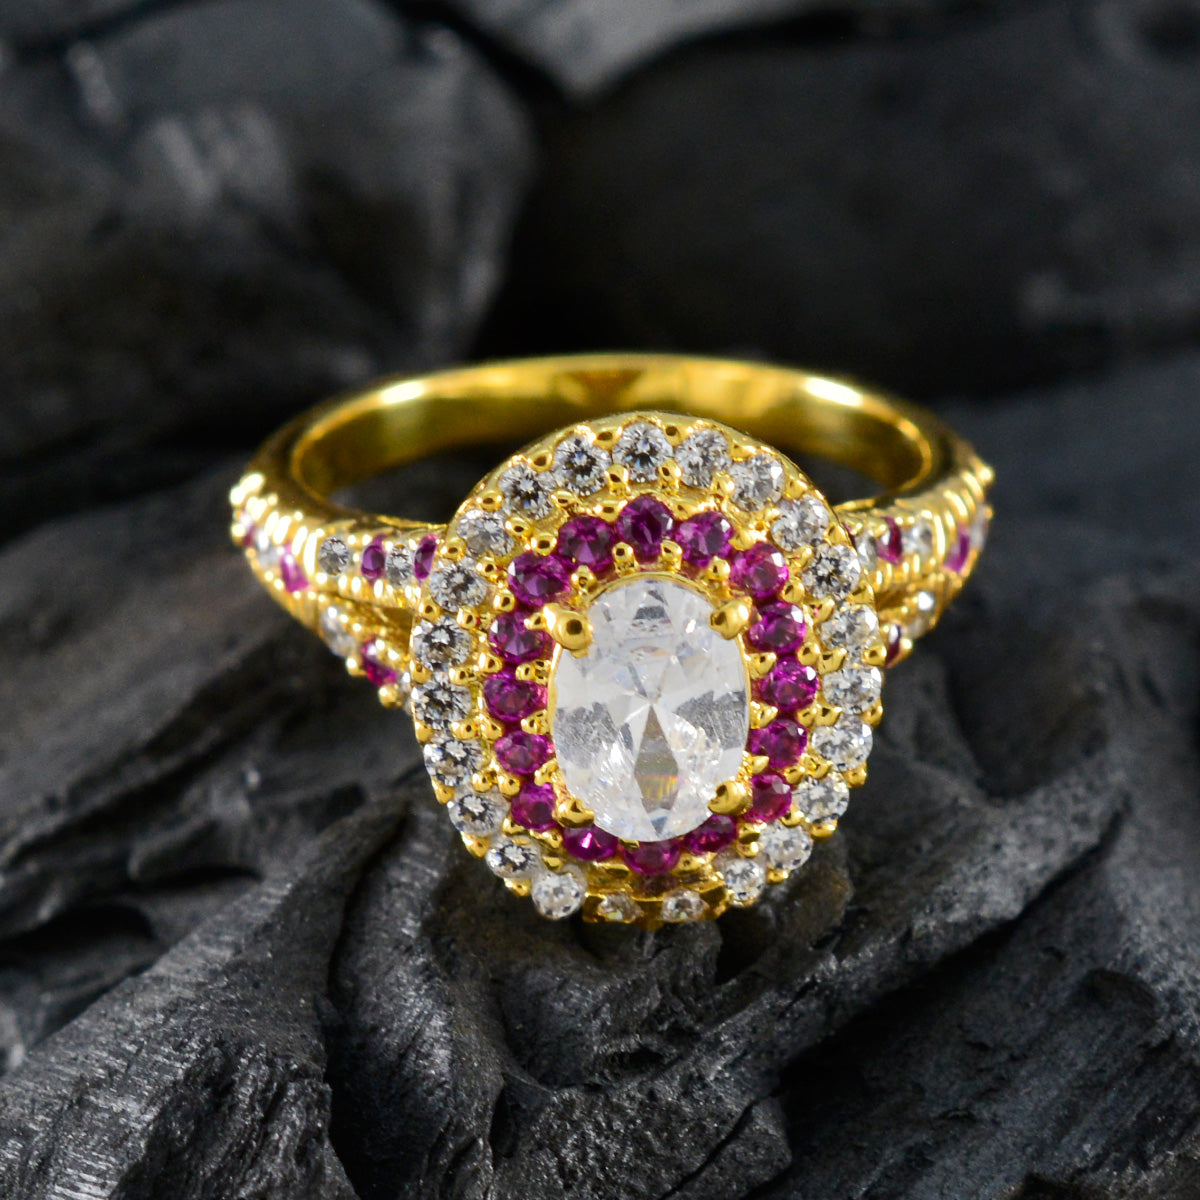 Anillo de plata deseable riyo con anillo con engaste de punta de forma ovalada de piedra de rubí cz chapado en oro amarillo